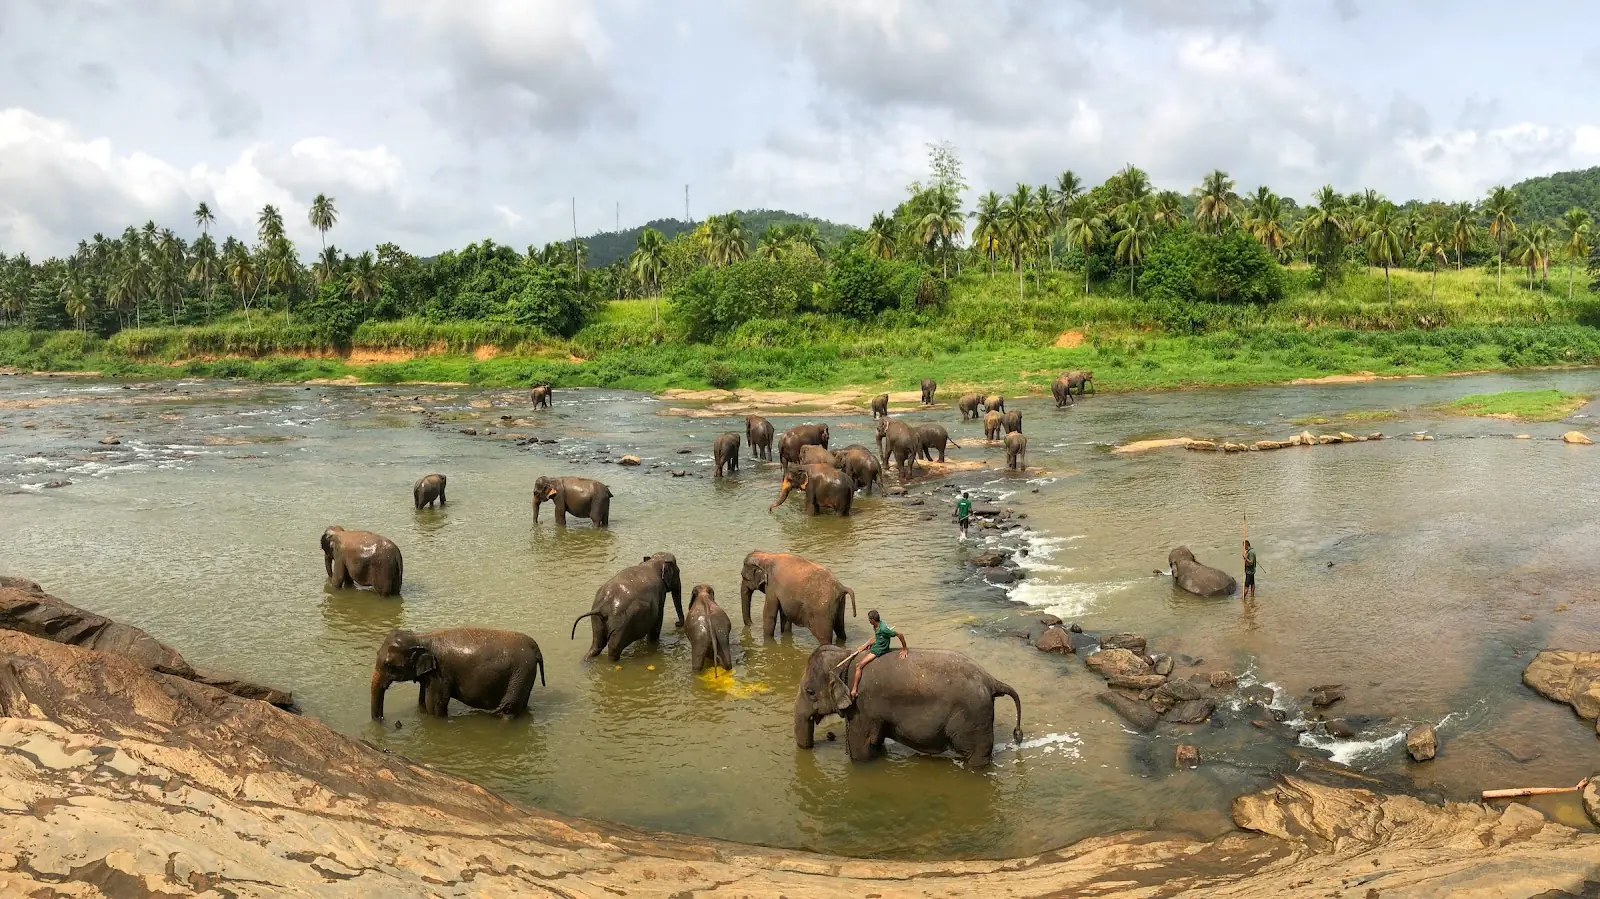 A river full of elephants in Sri Lanka